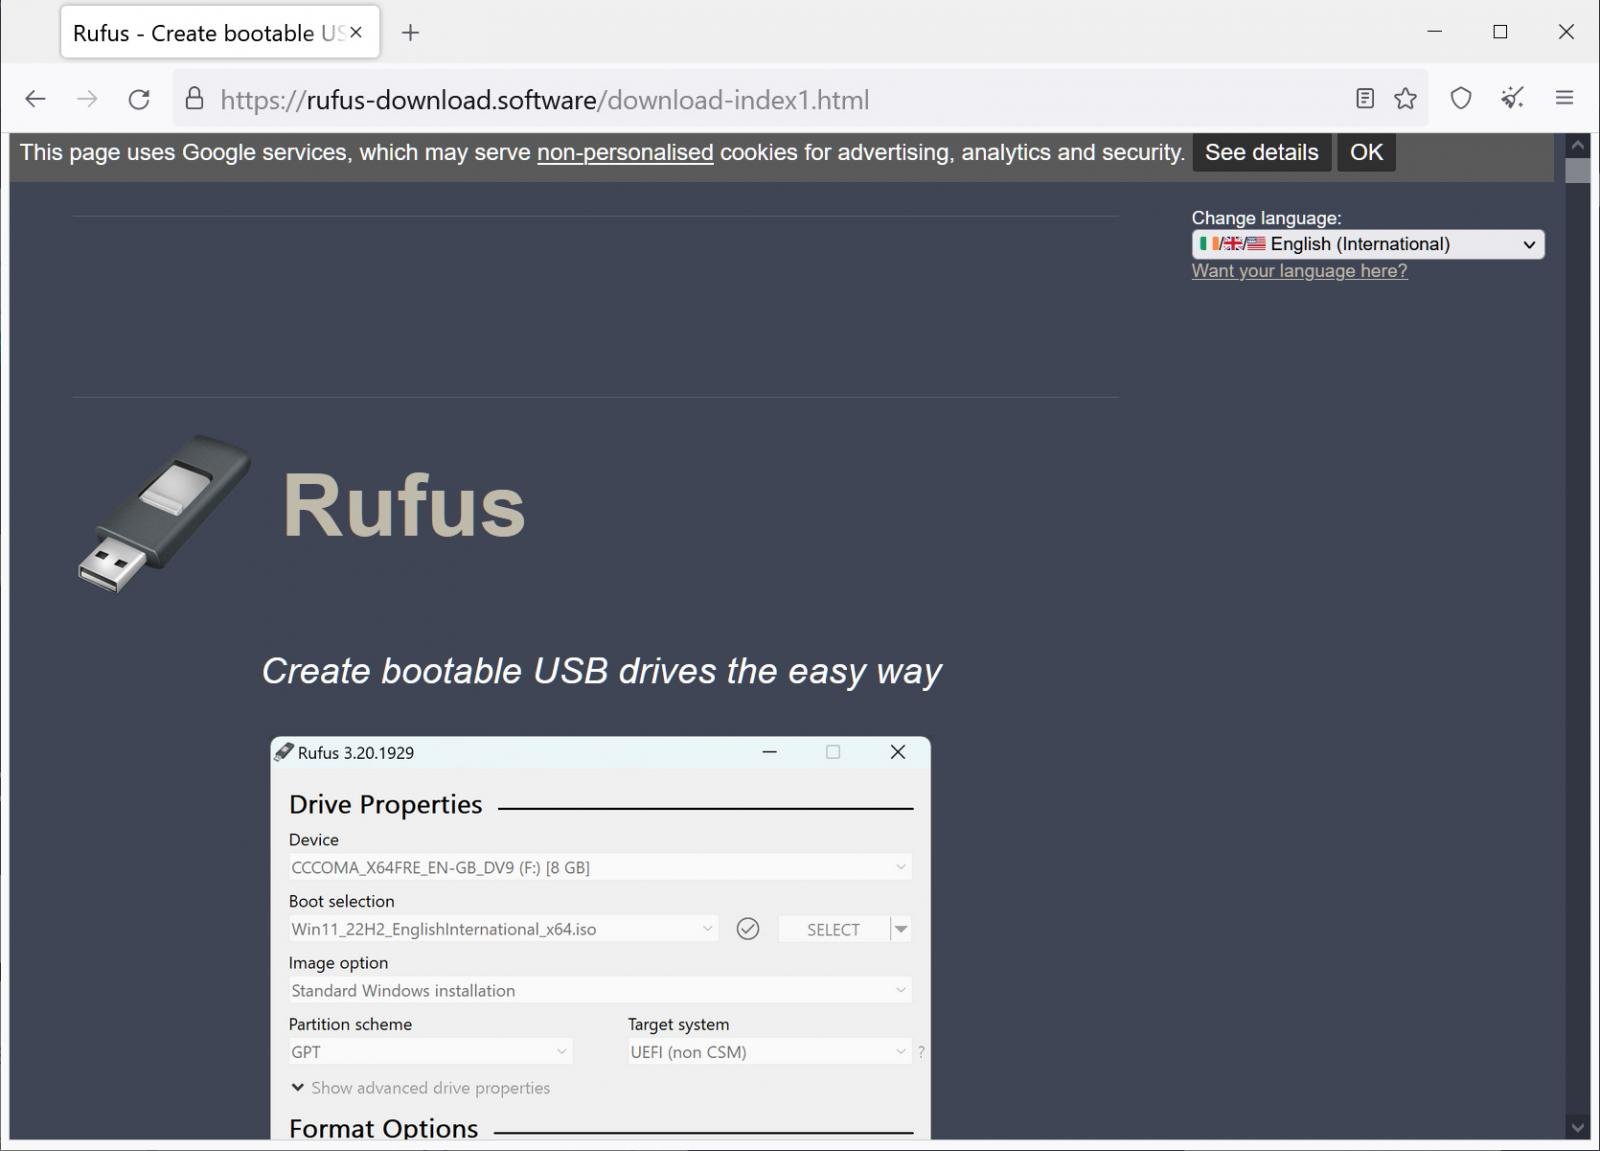 Fake Rufus download site